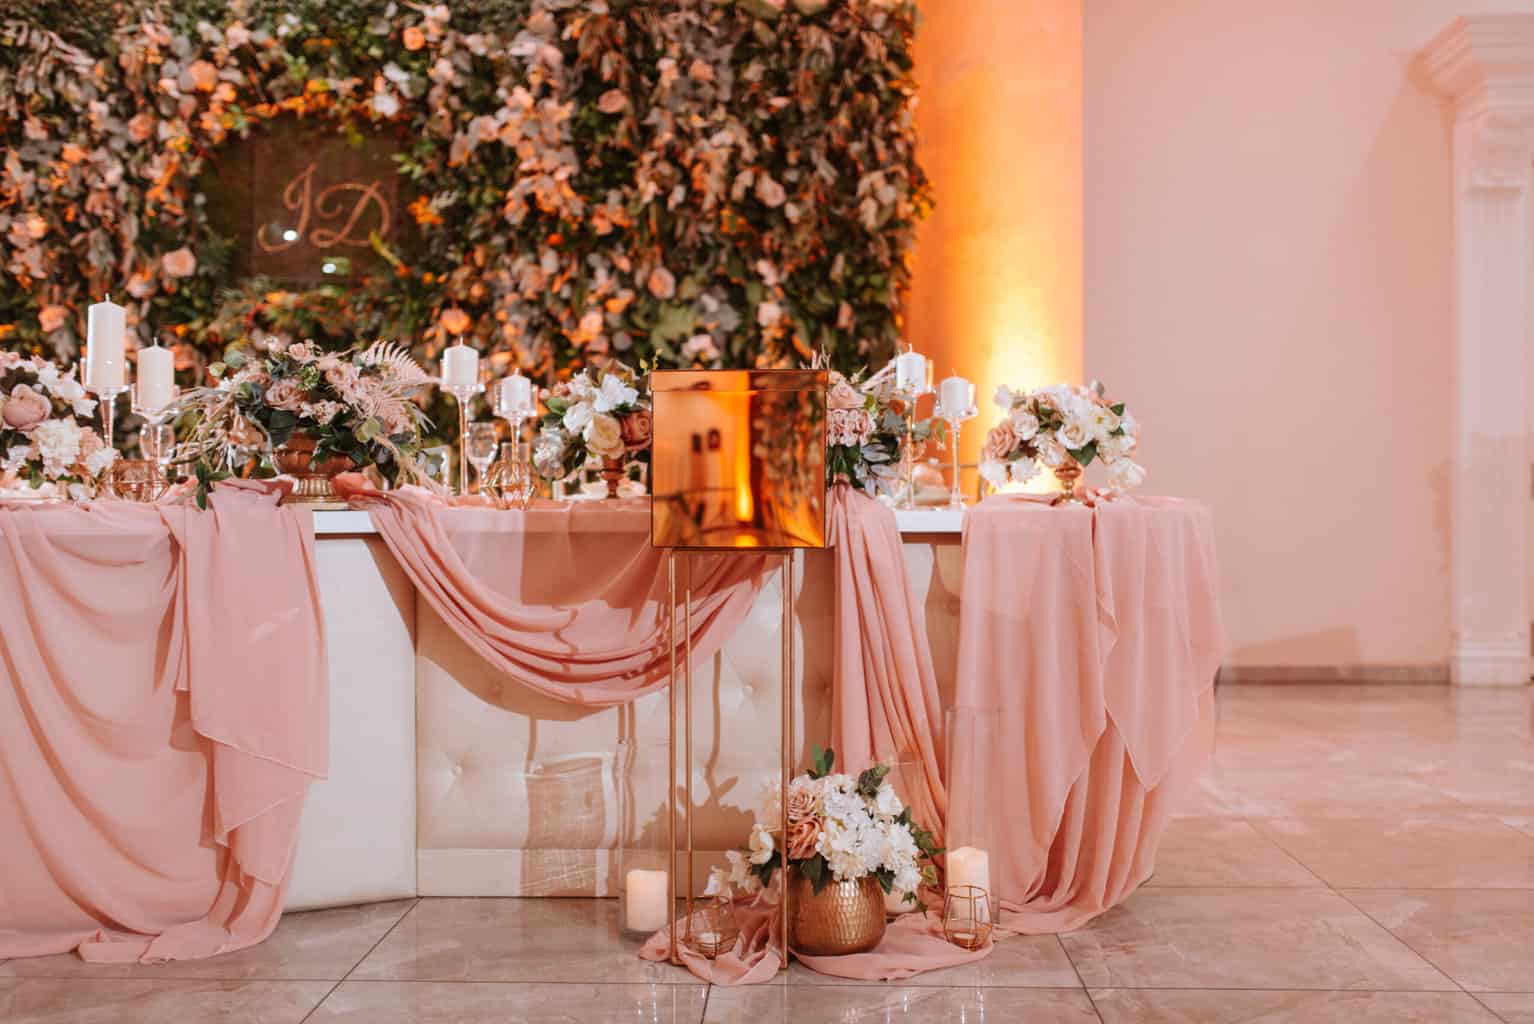 Rose gold wedding decor against beige walls